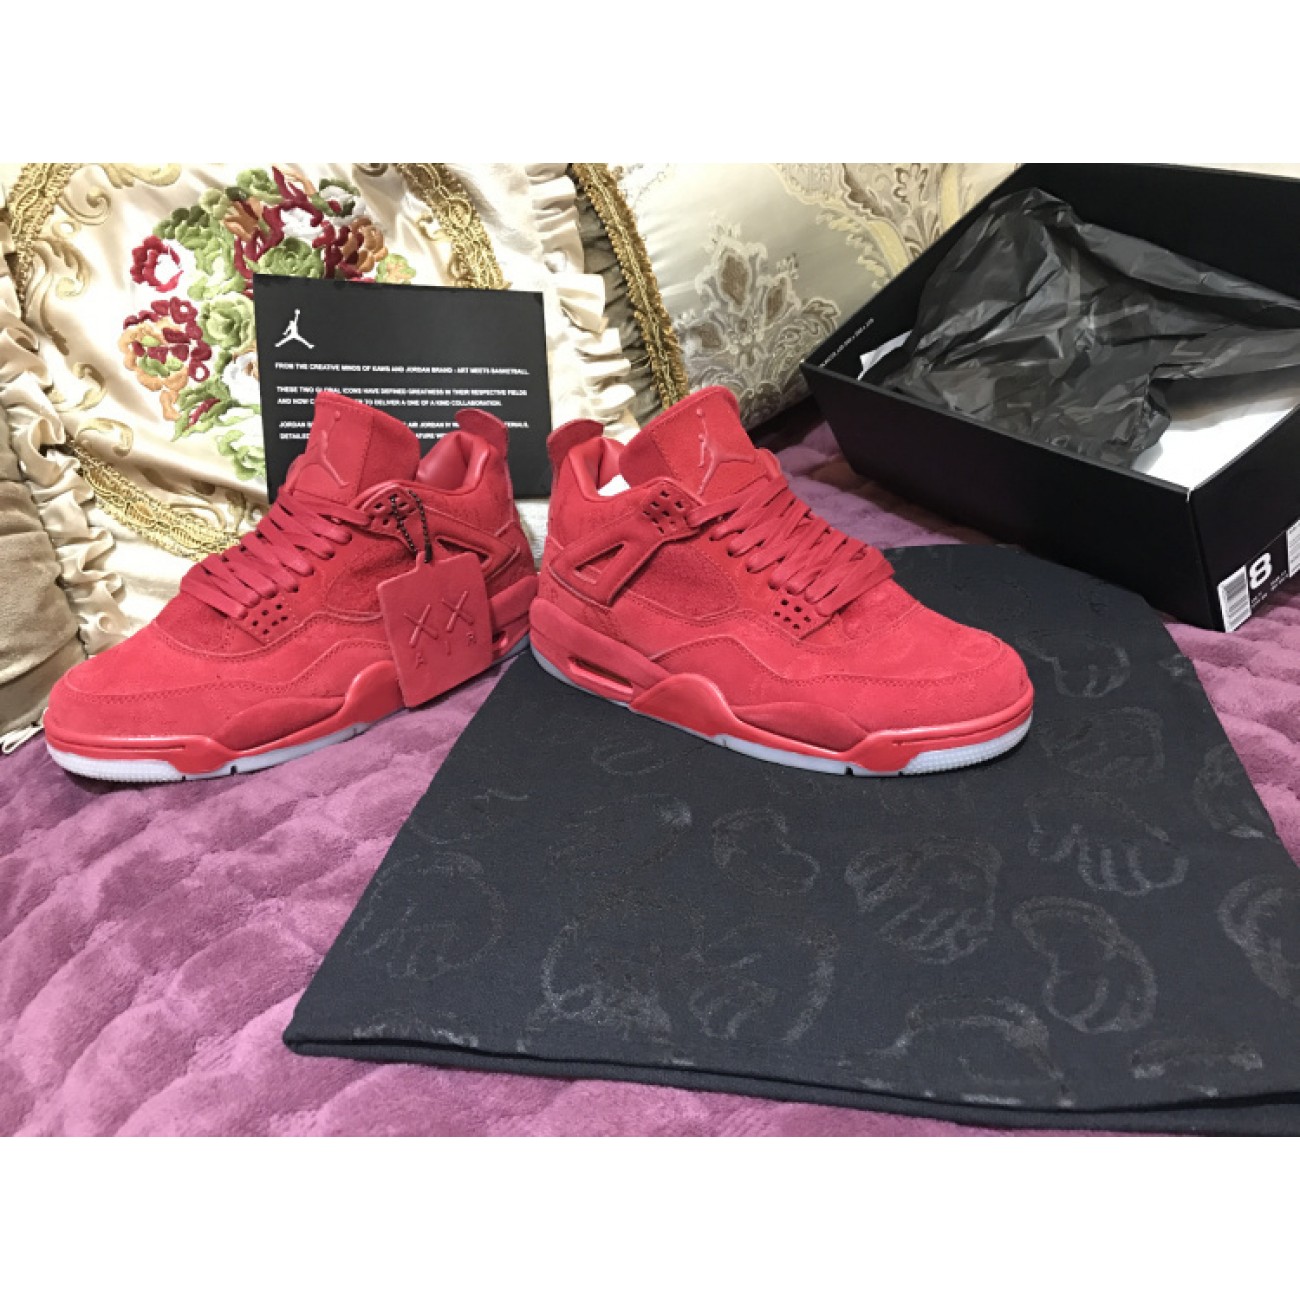 Air Jordan 4 x KAWS Red 930155-609